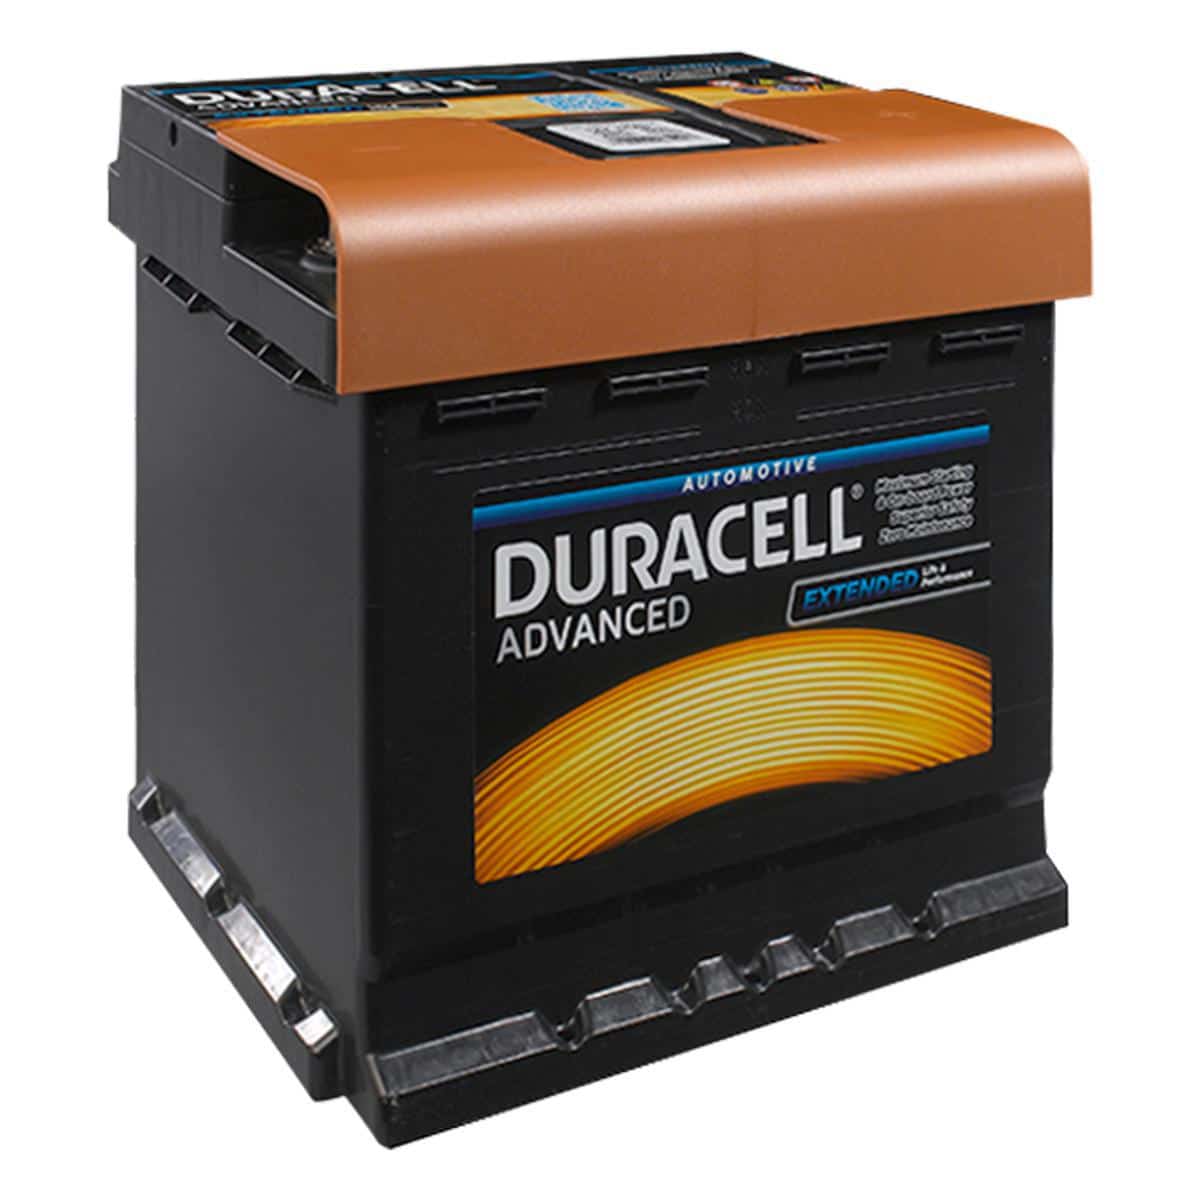 Duracell Car Battery Warranty Claim